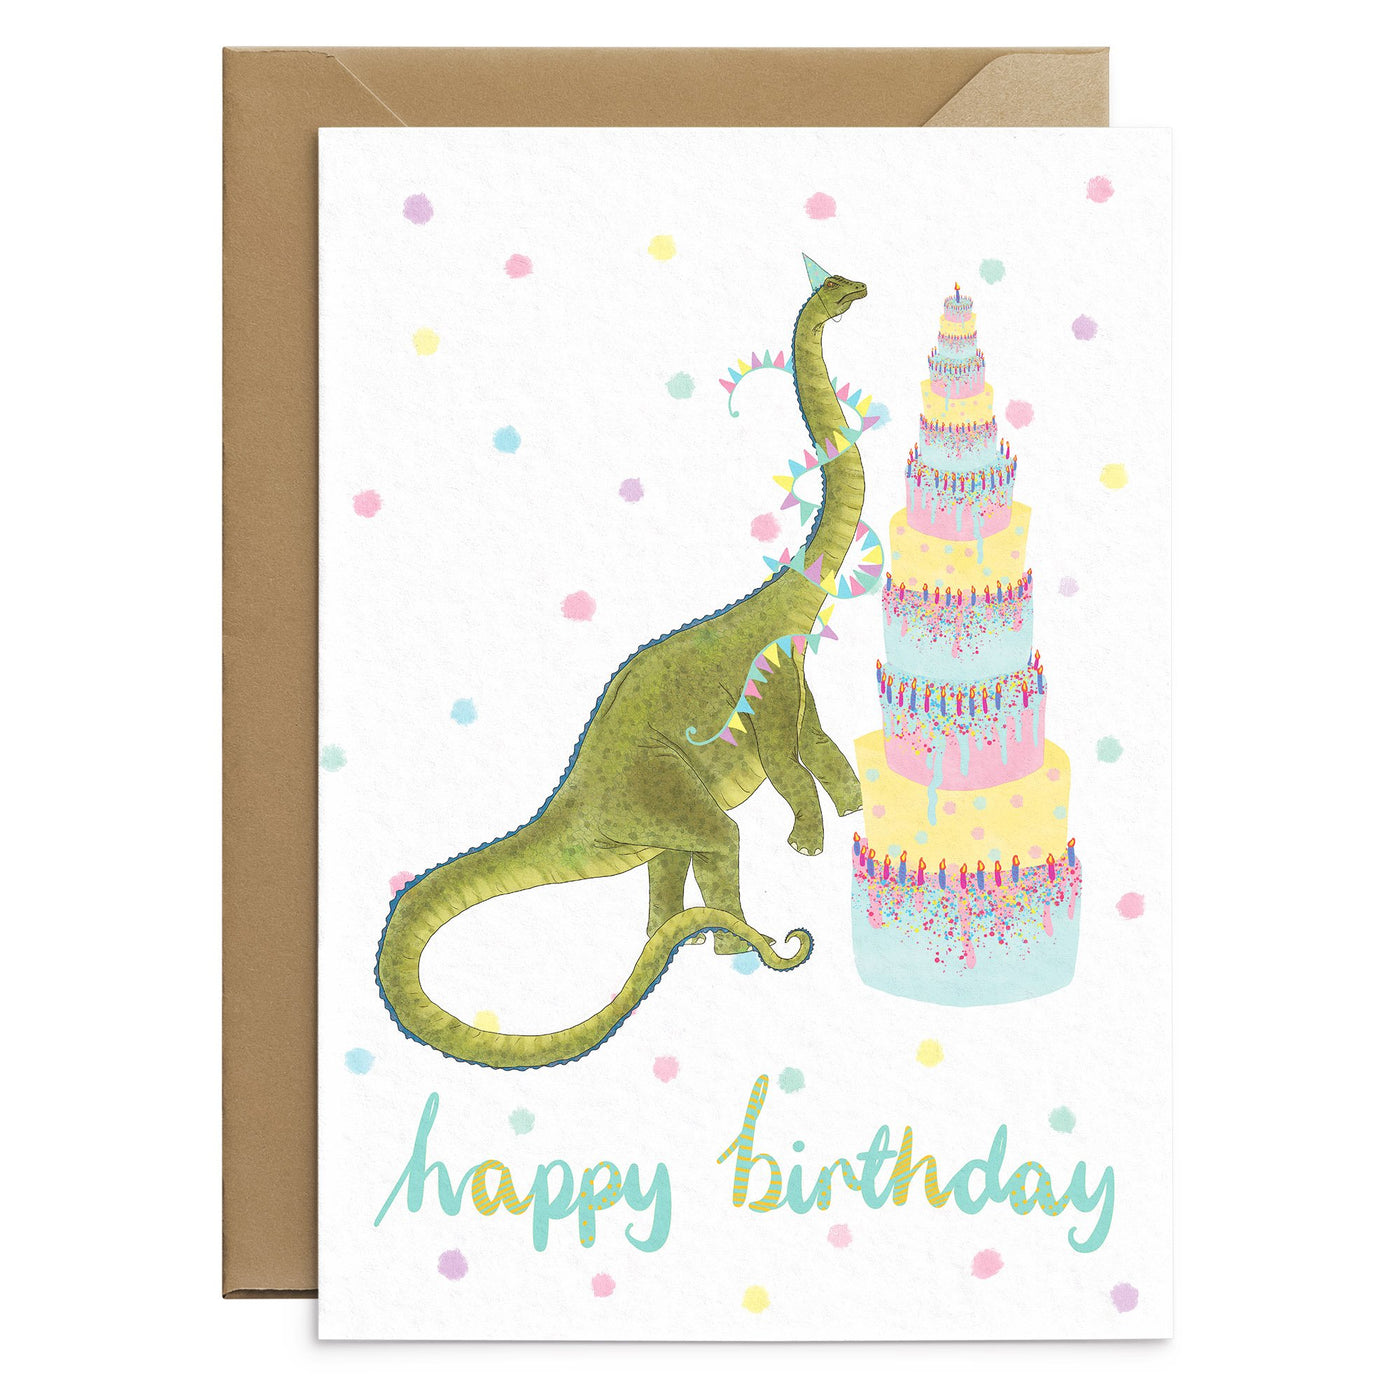 Diplodocus Dinosaur Birthday Card - Poppins & Co.